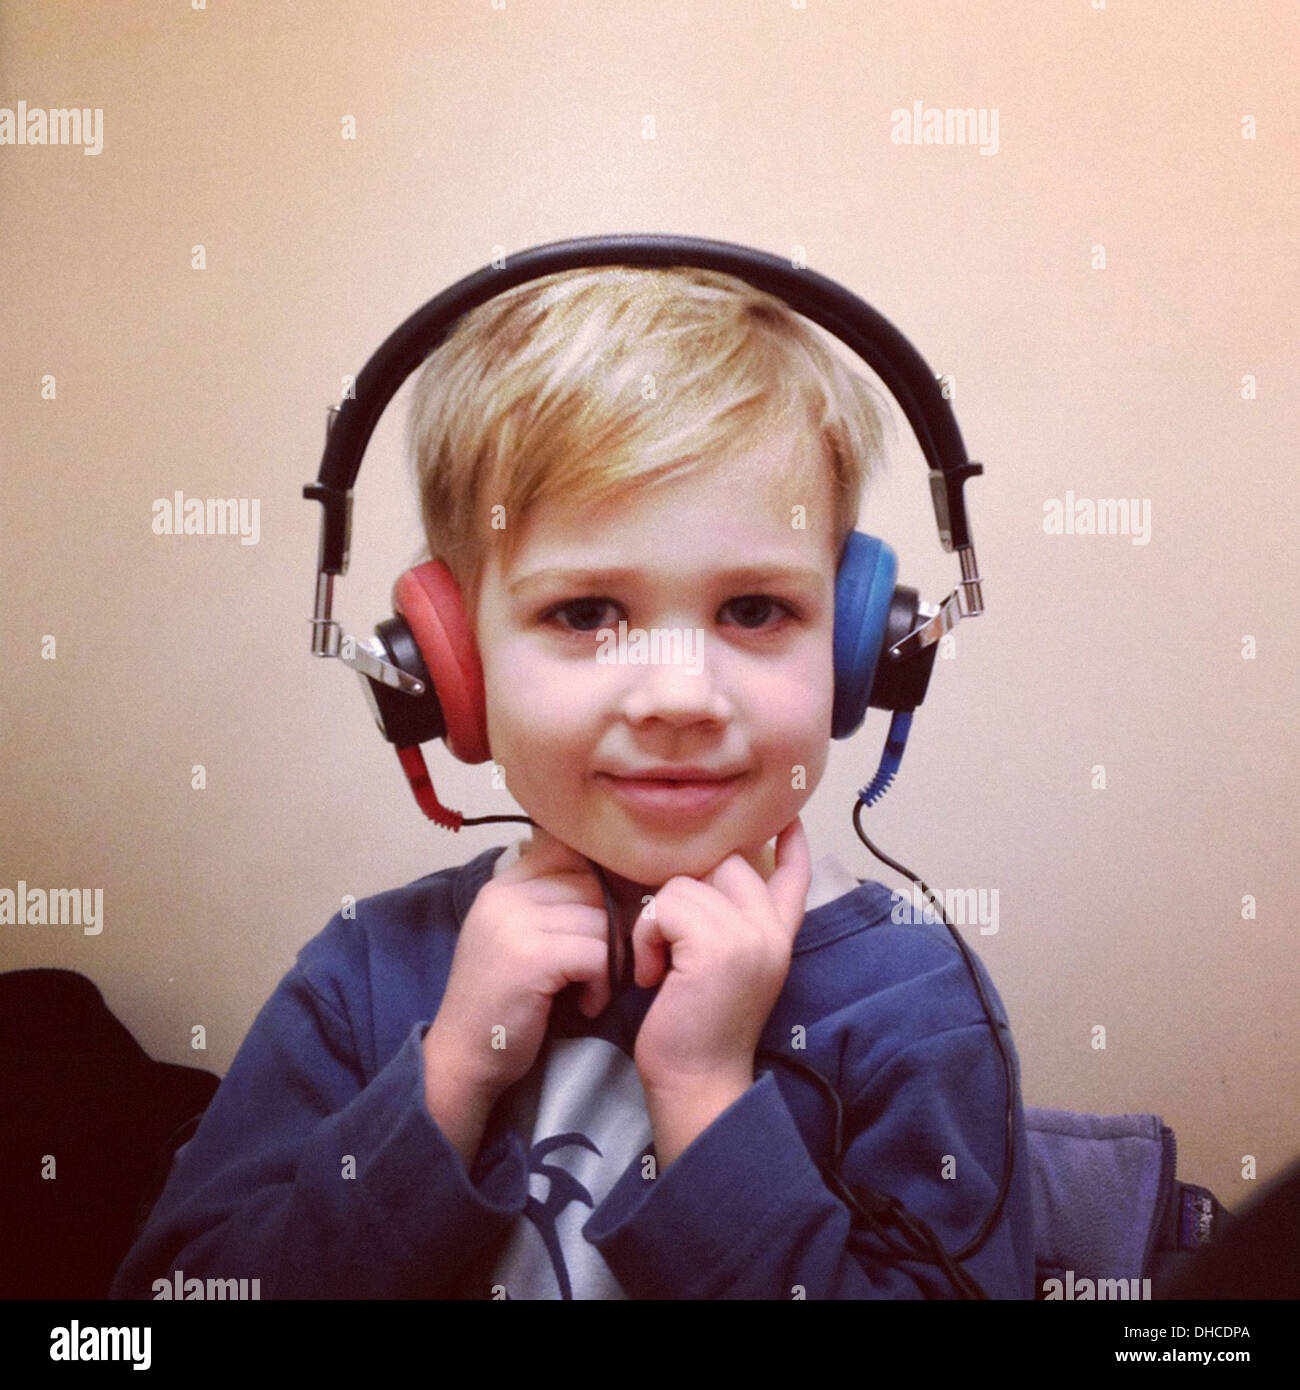 Young Boy Wearing Headphones Stock Photo